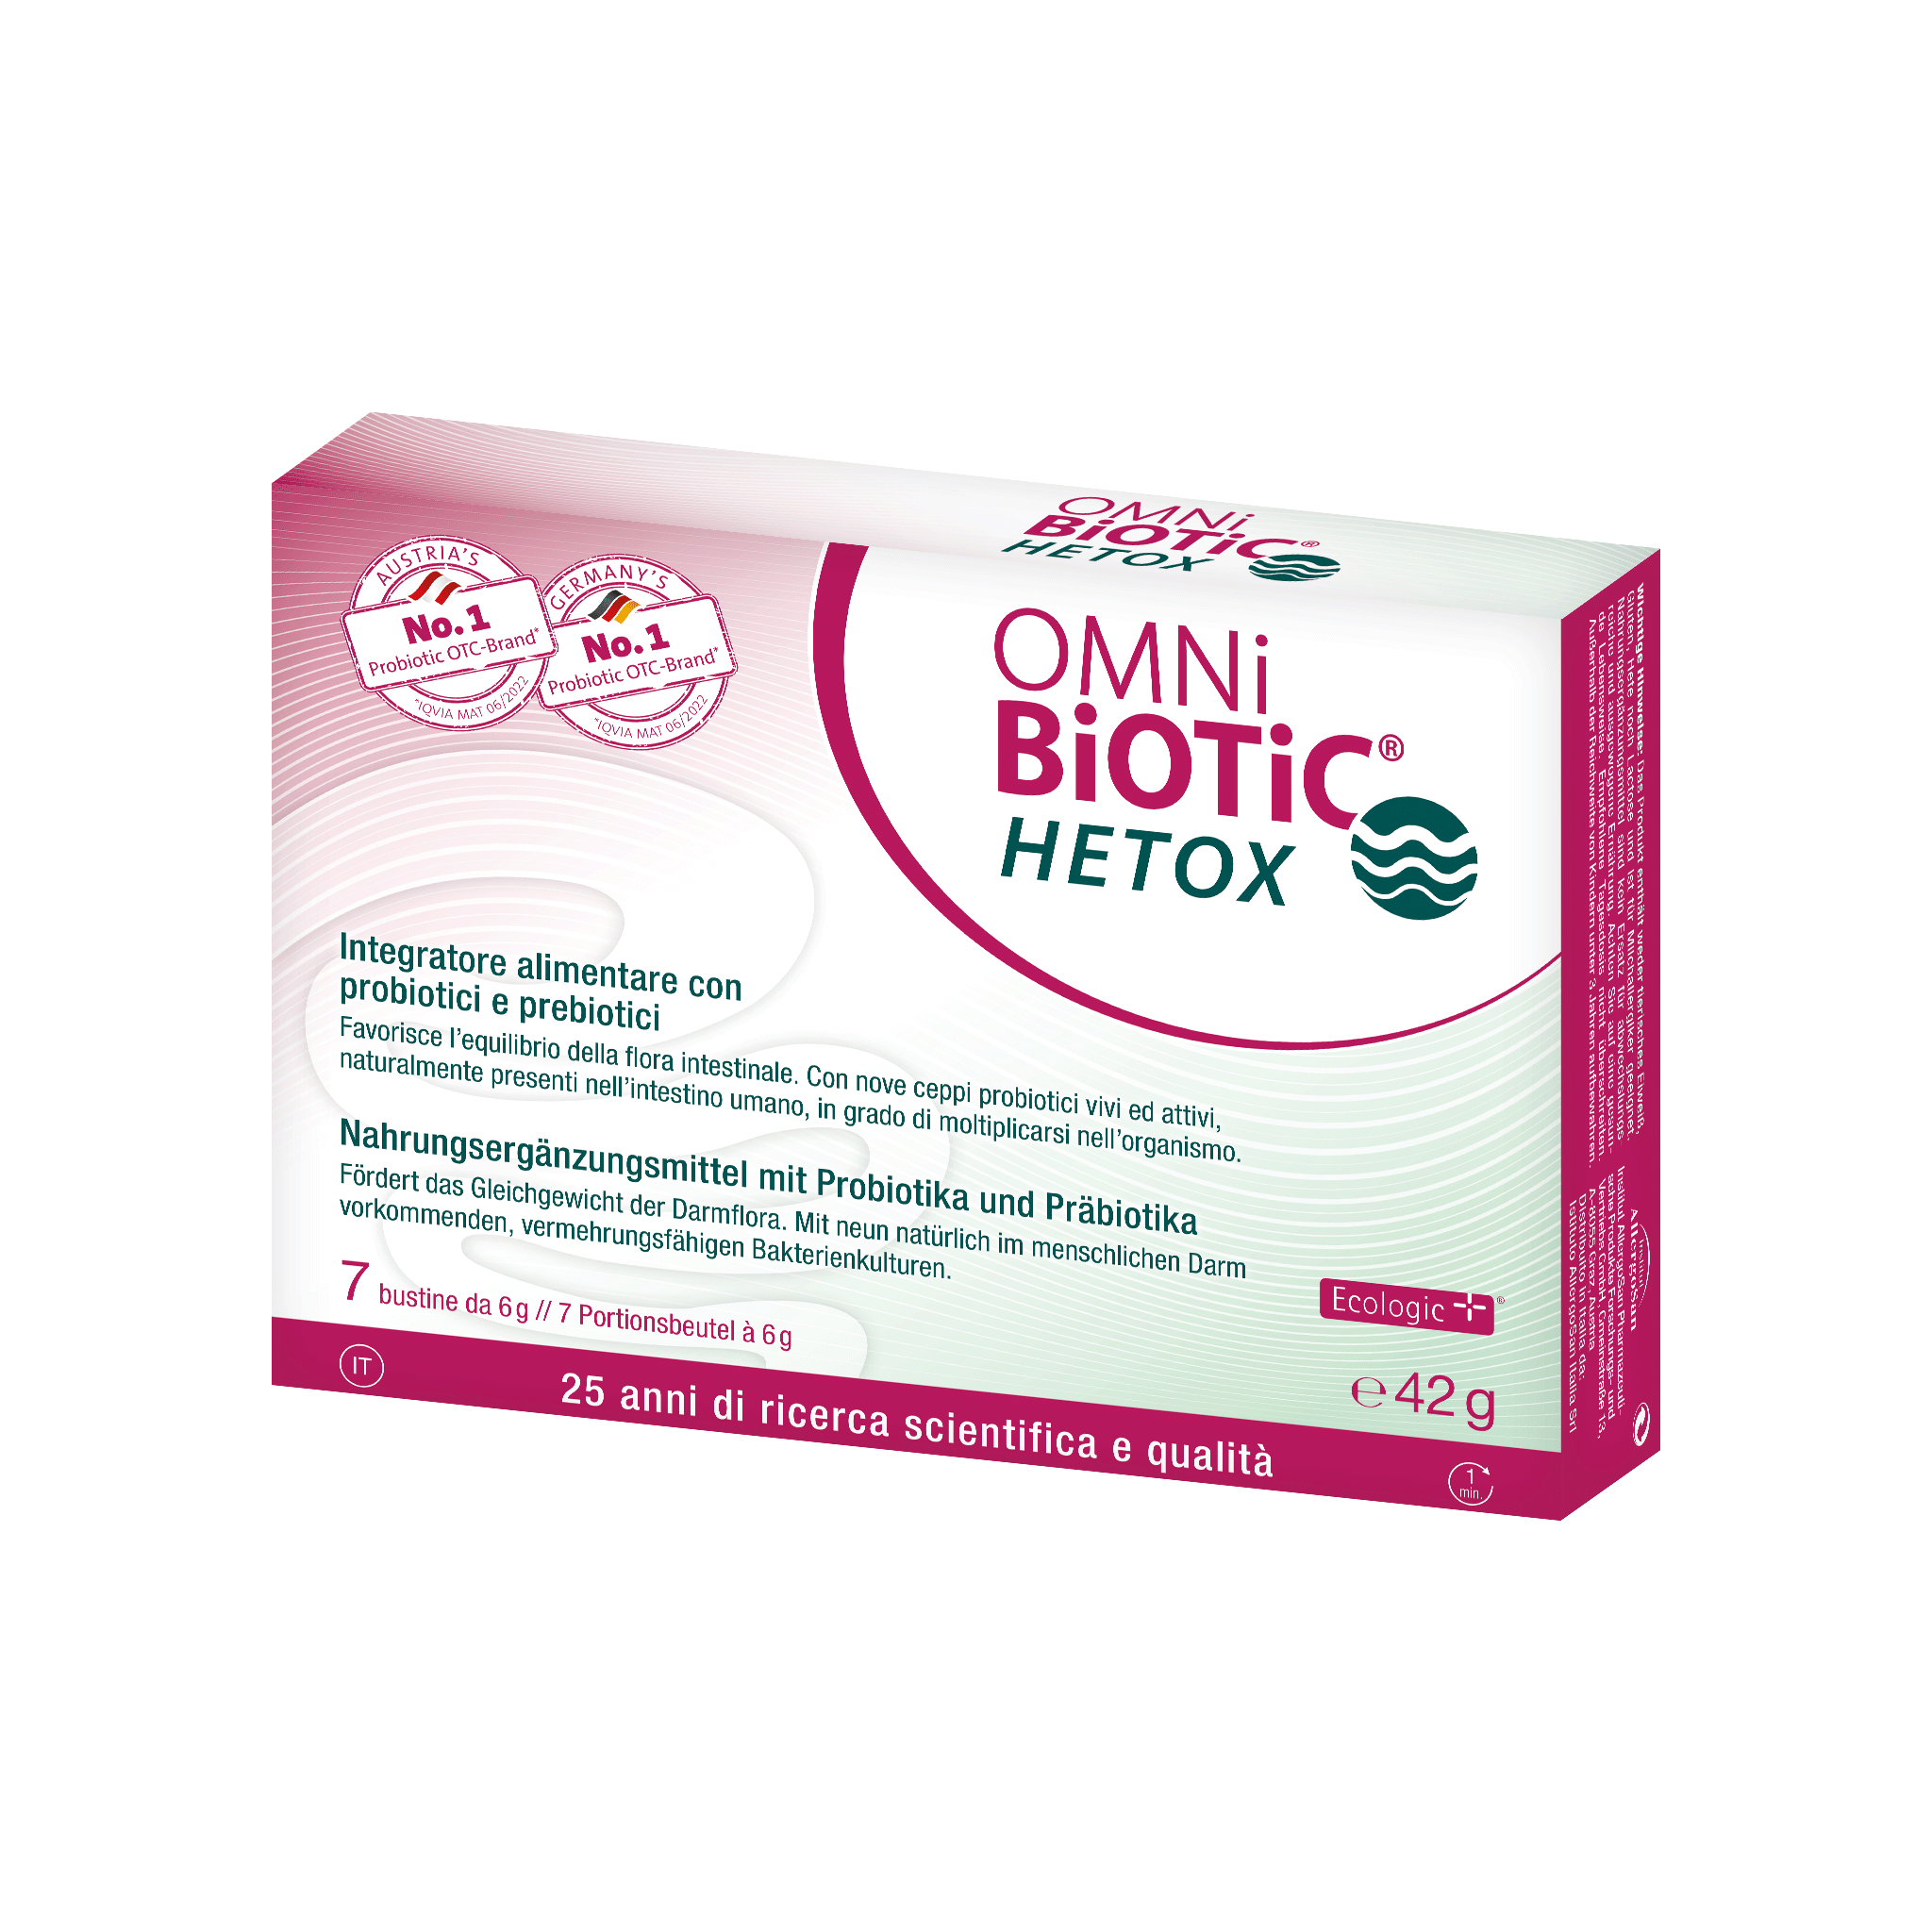 OMNi-BiOTiC® HETOX